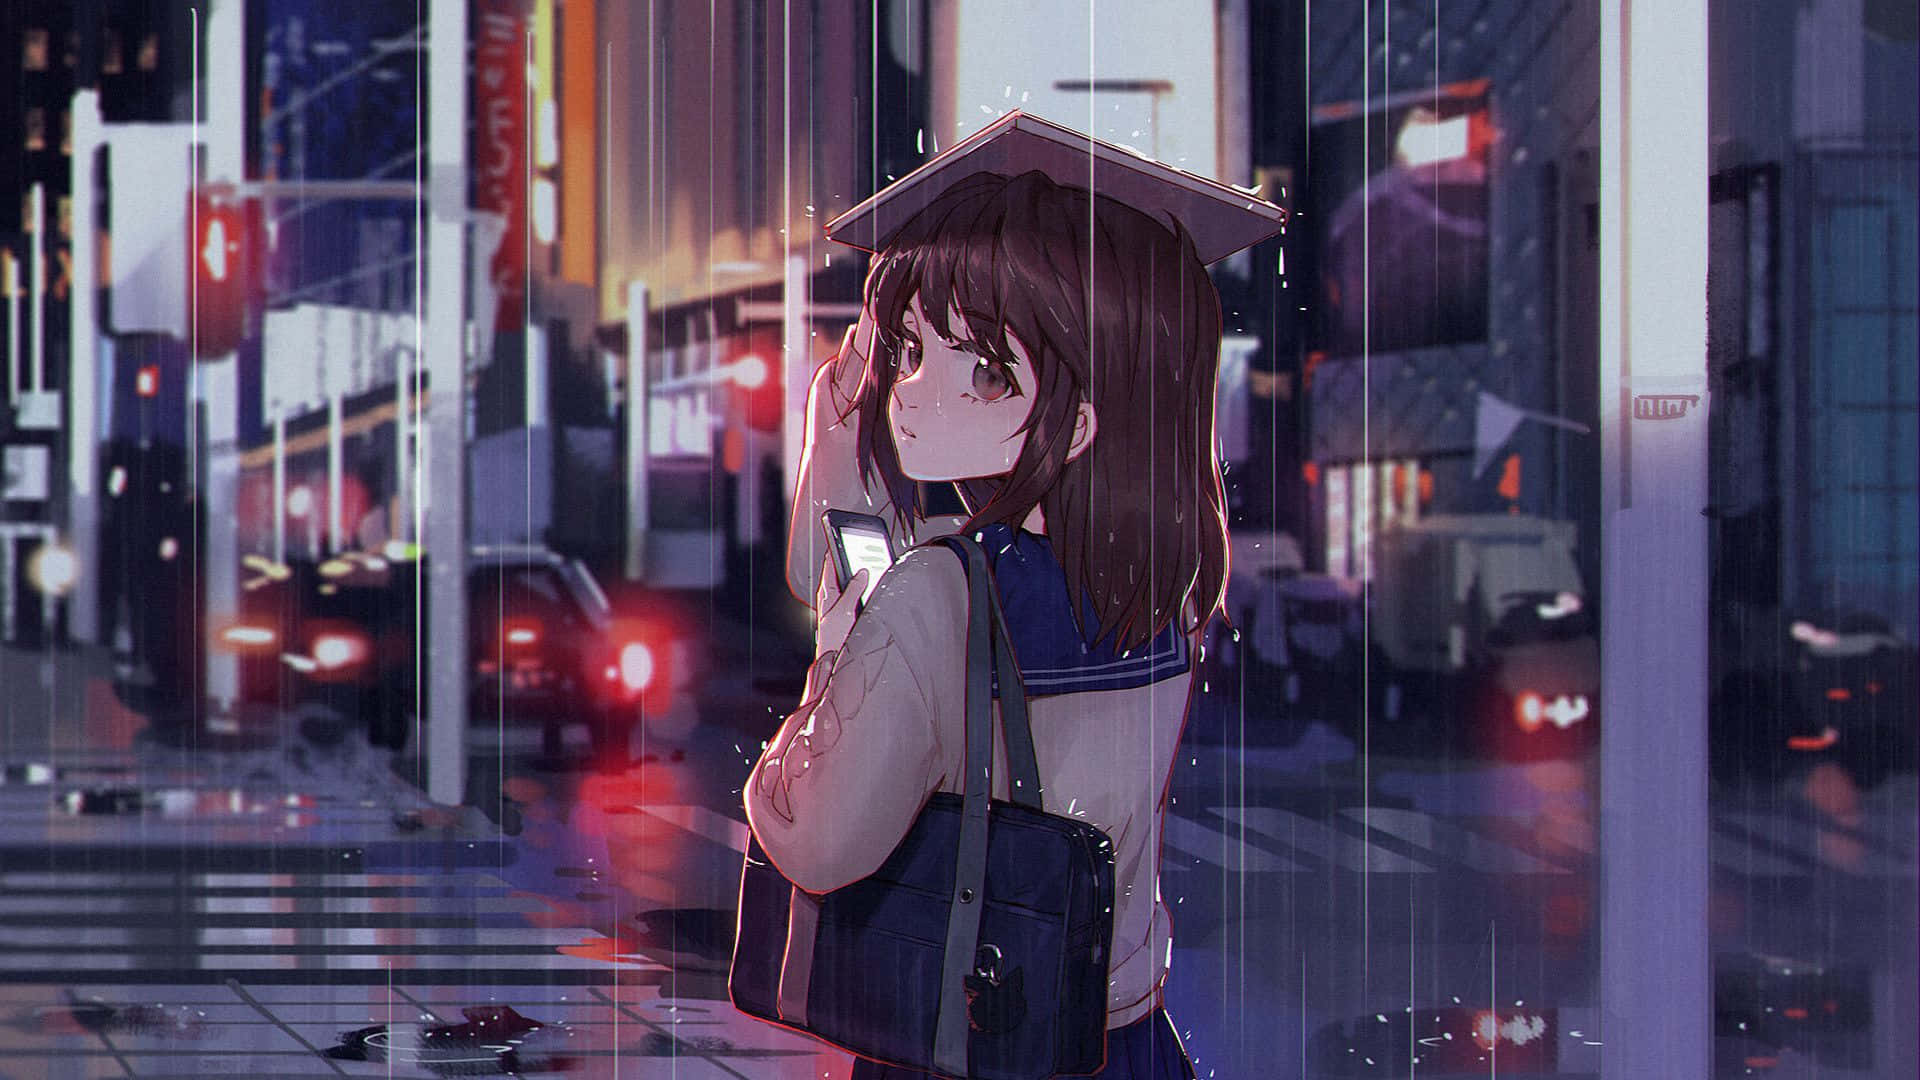 Kawaii anime girl in NYC on a rainy day! by ThunderbirdSkies on DeviantArt